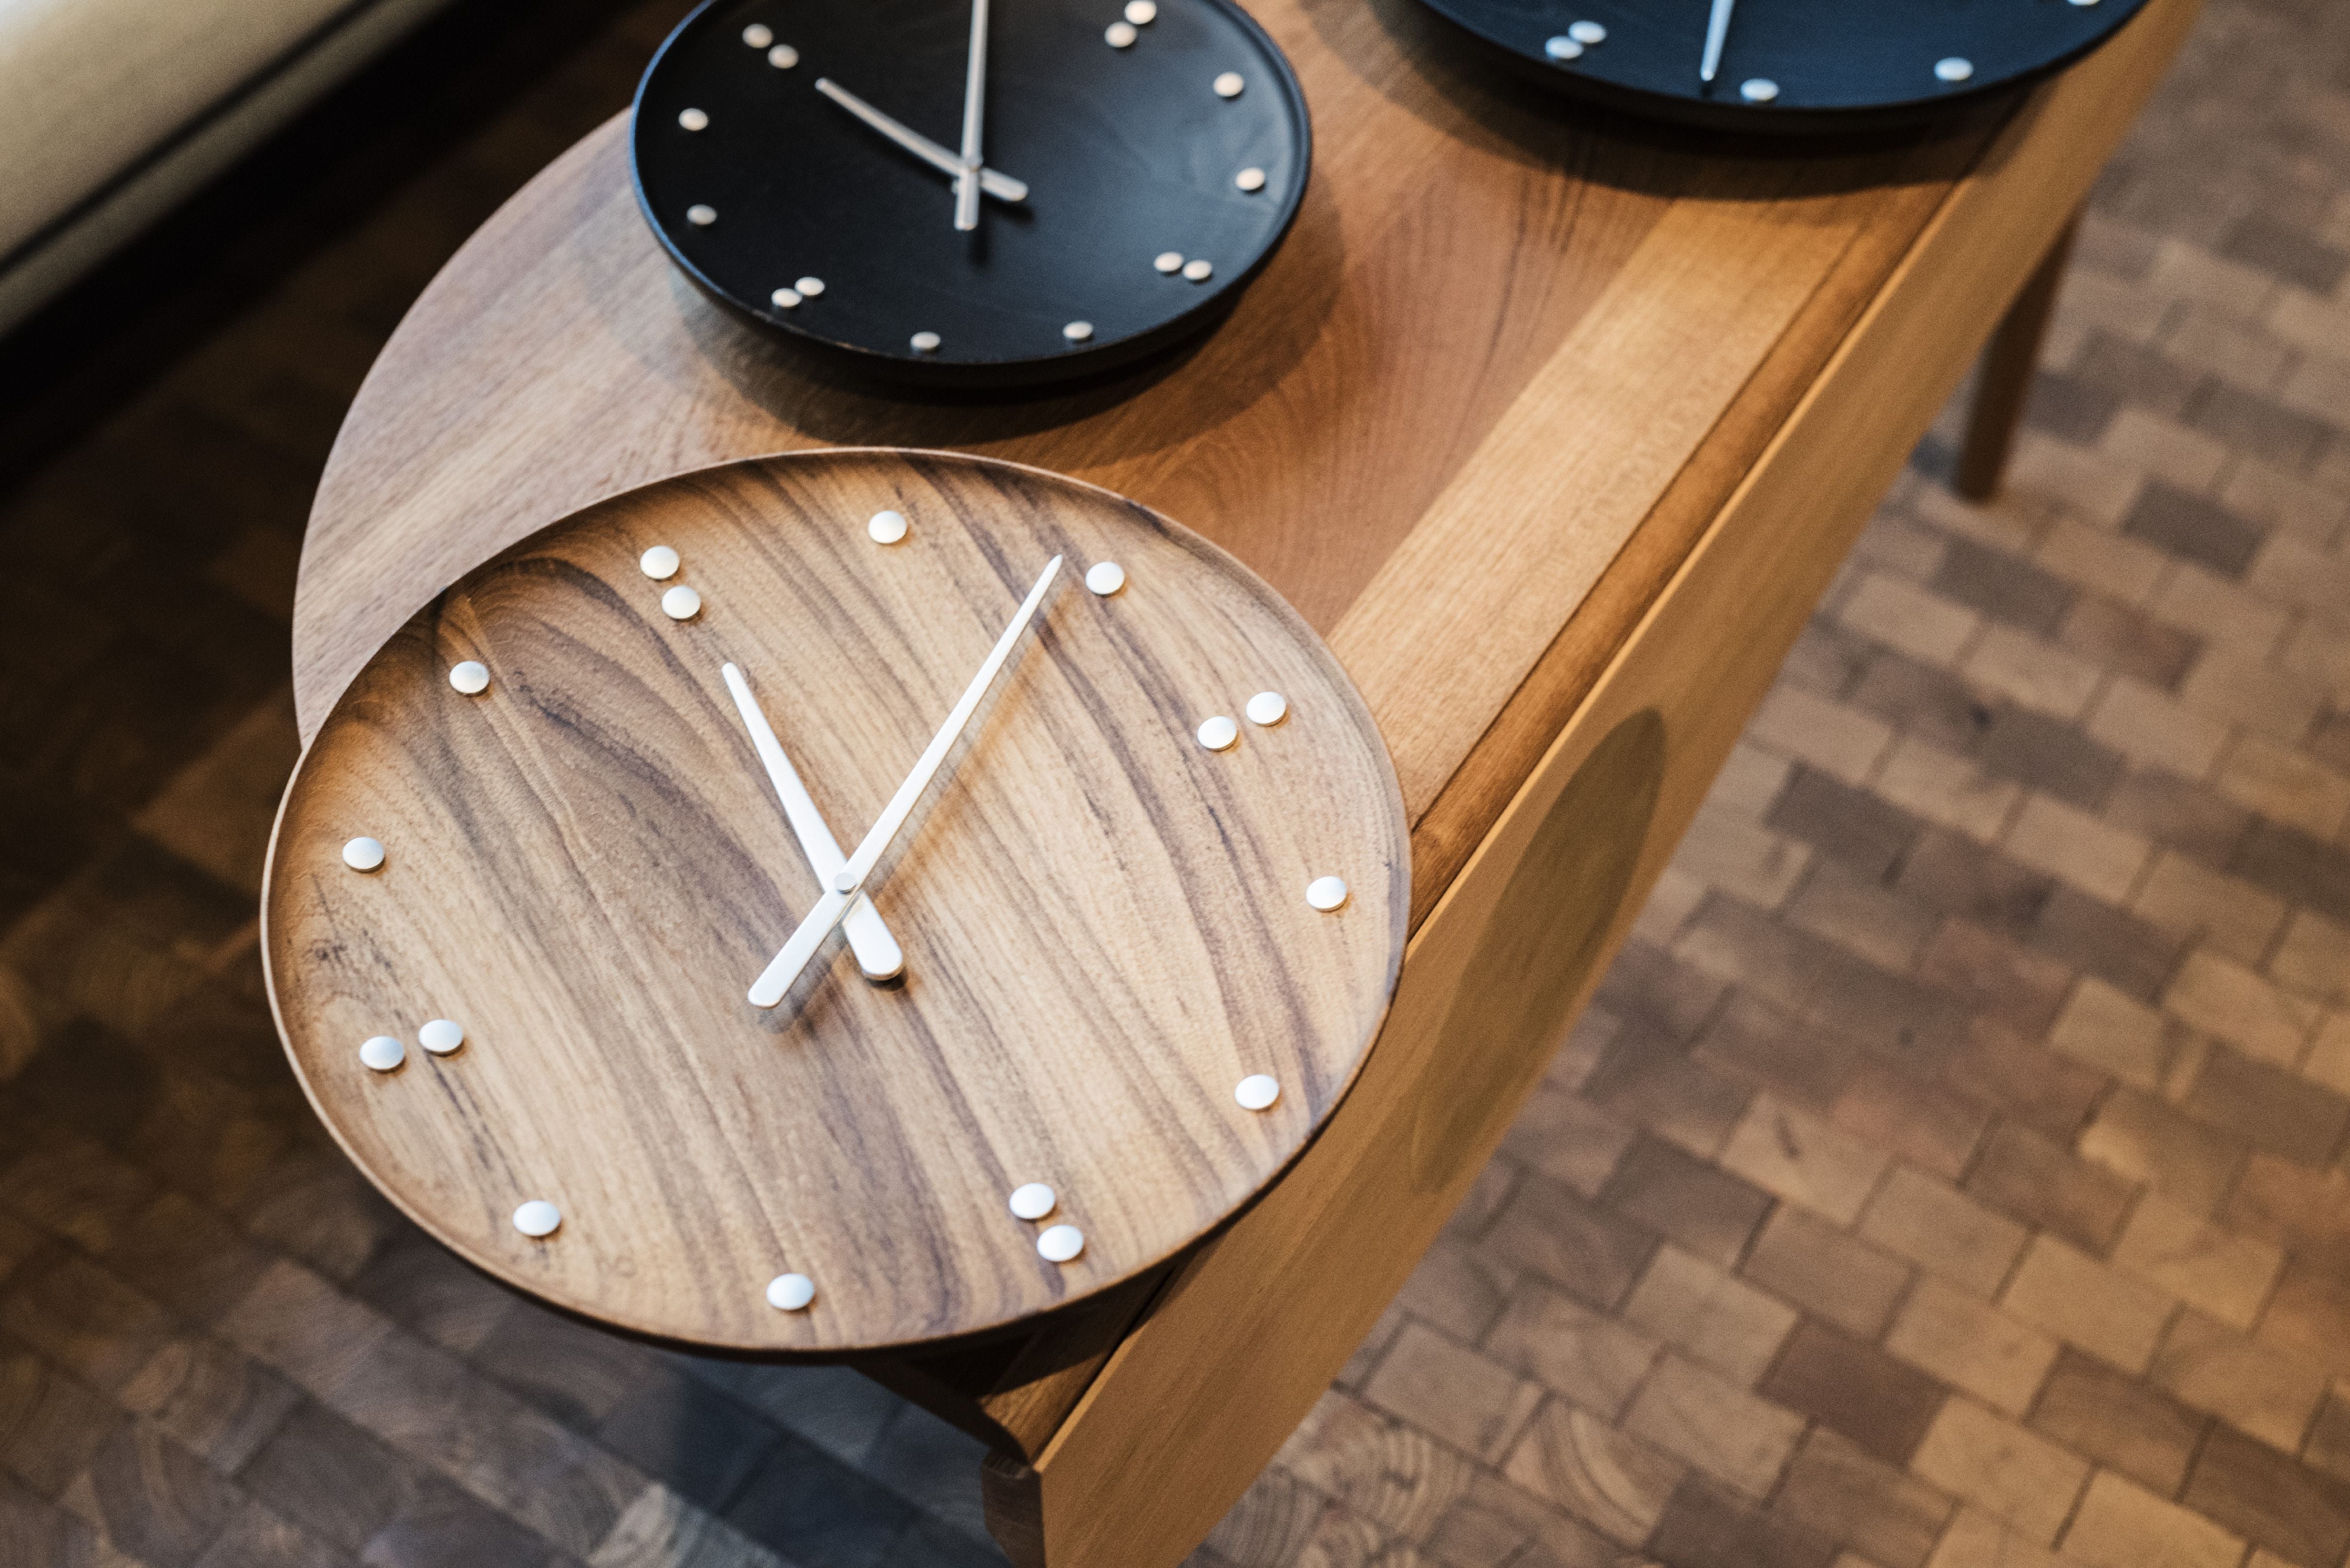 Architectmade Finn Juhl Wall Clock Black, Ø35 cm